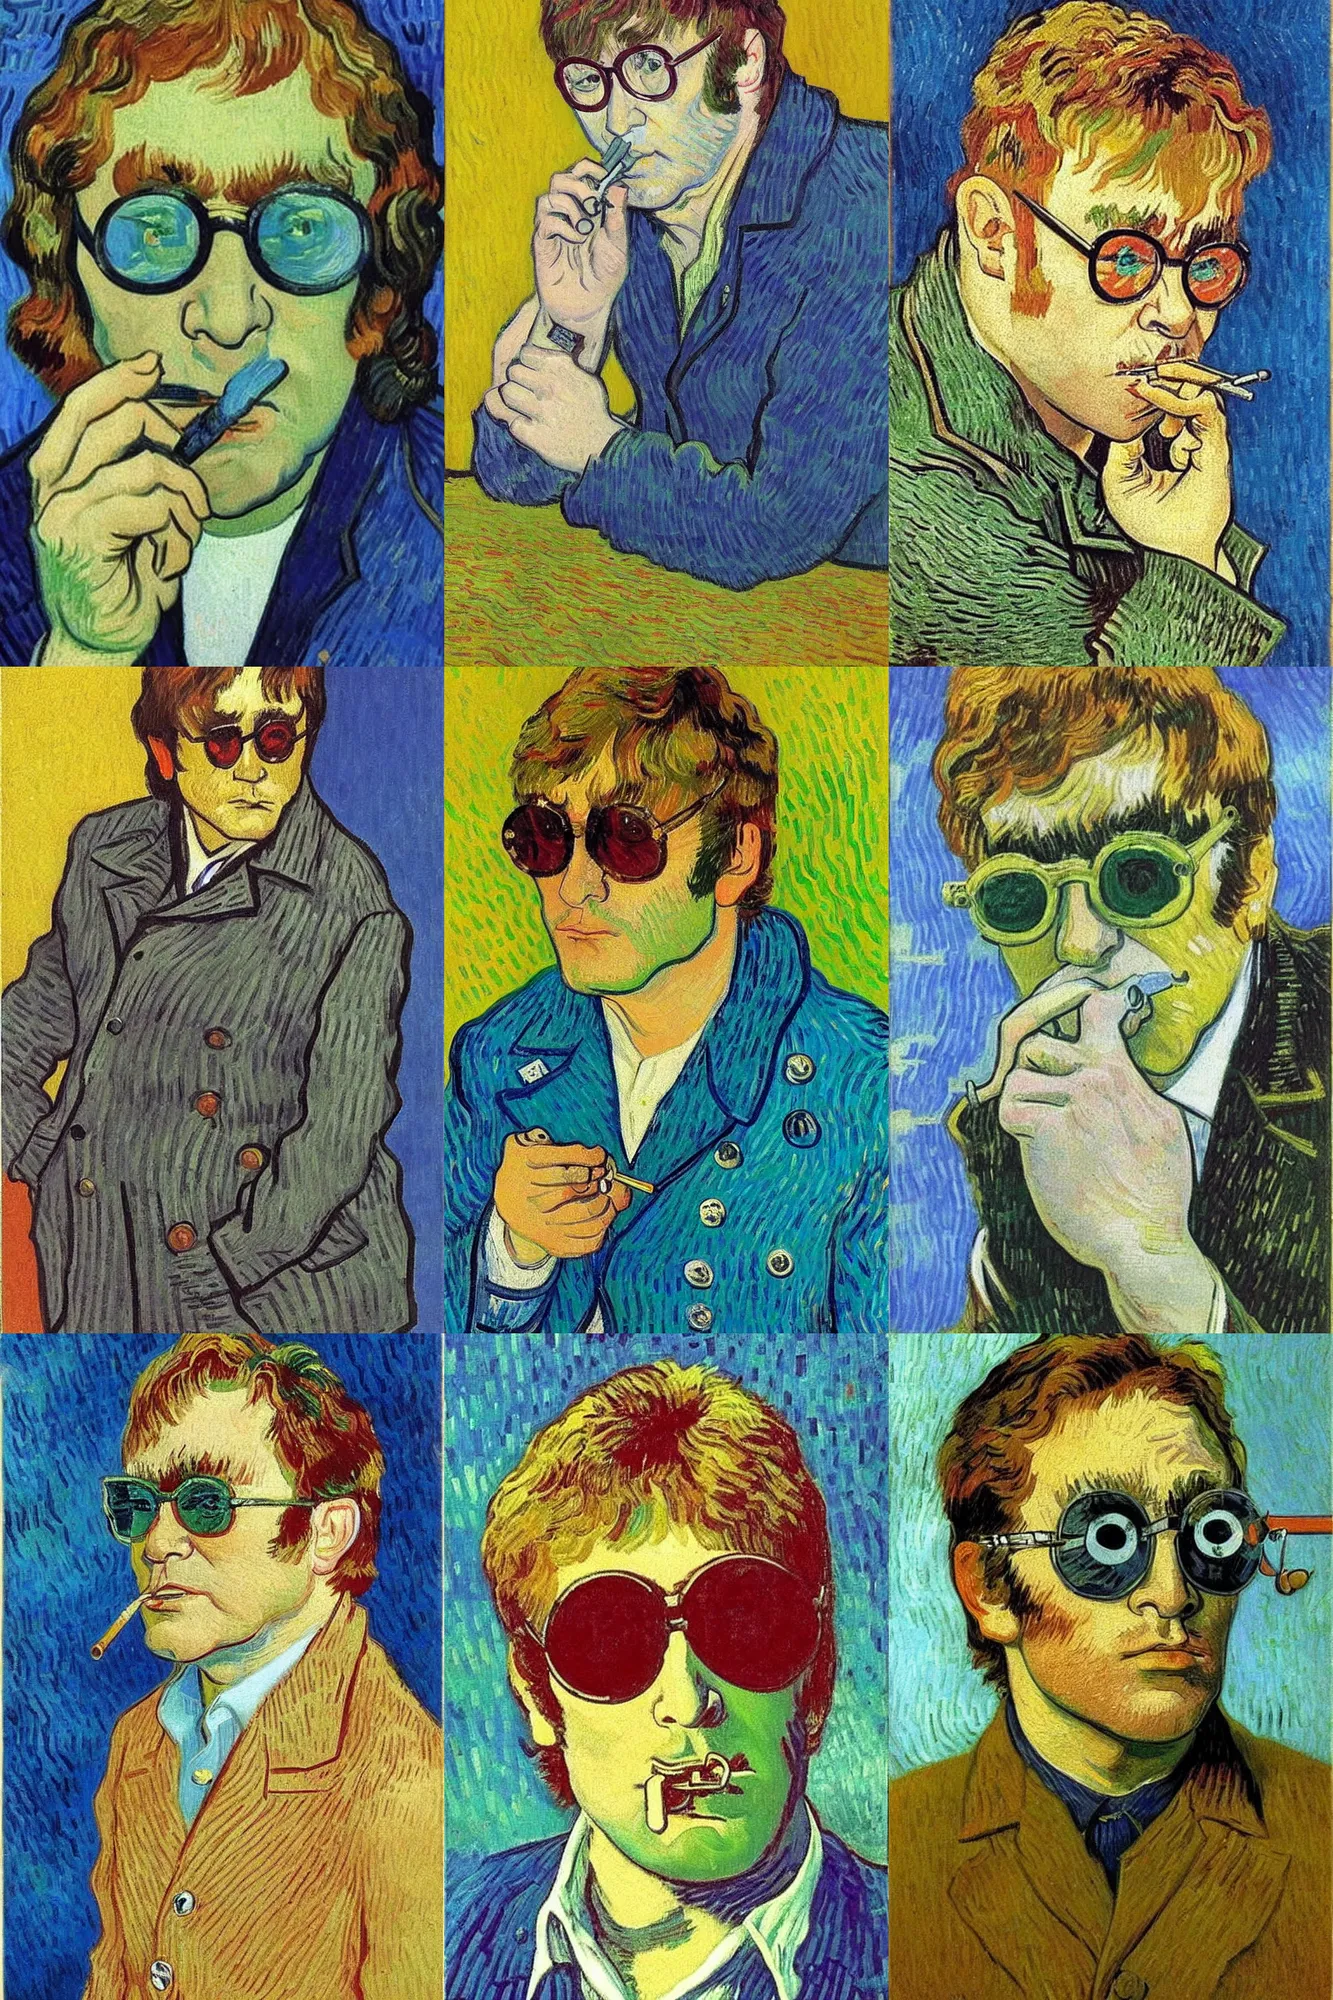 Prompt: Portrait of Elton John Lennon smoking in 1970 by Van gogh